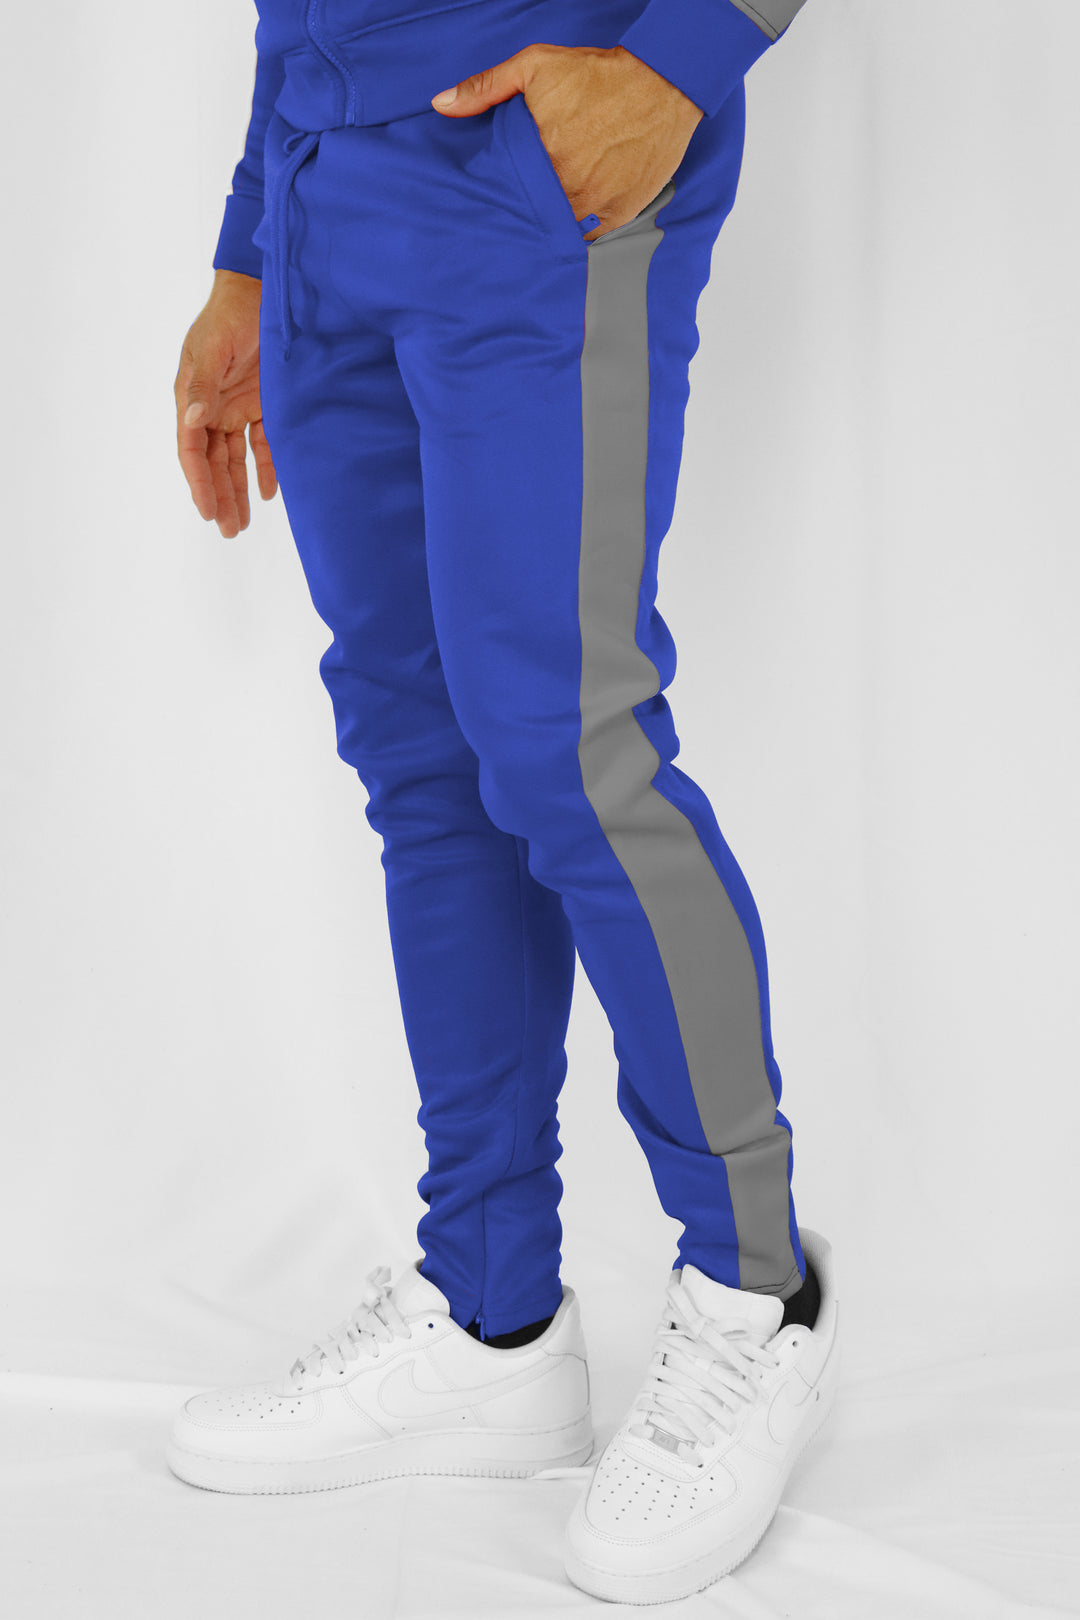 Solid One Stripe Track Pants (Royal - Grey) - Zamage